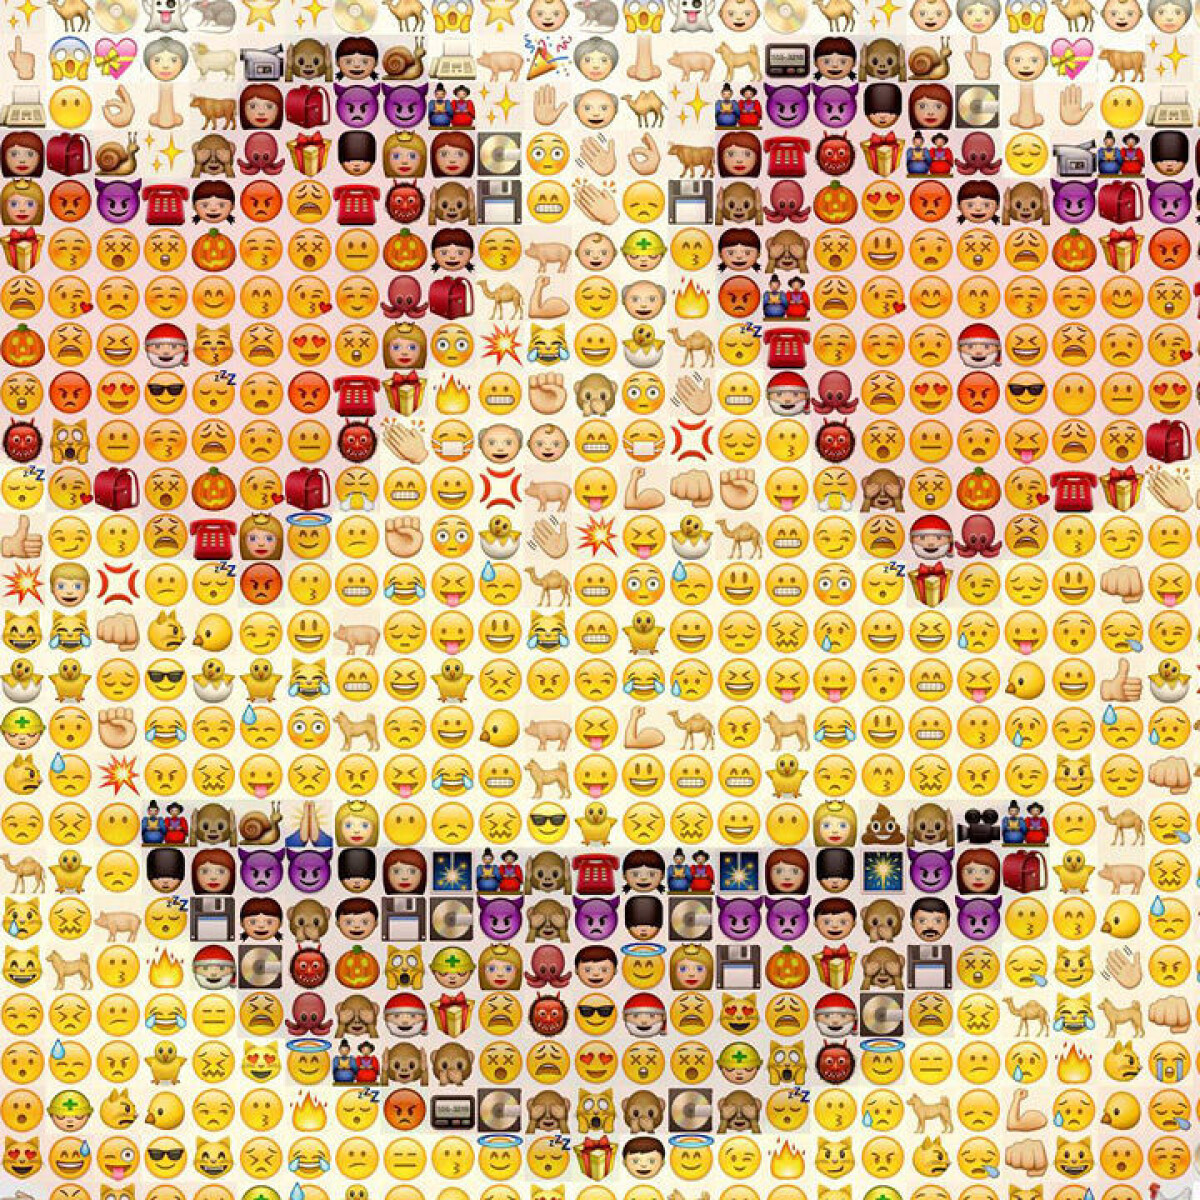 The Emotional Impact of Emojis on Psychology